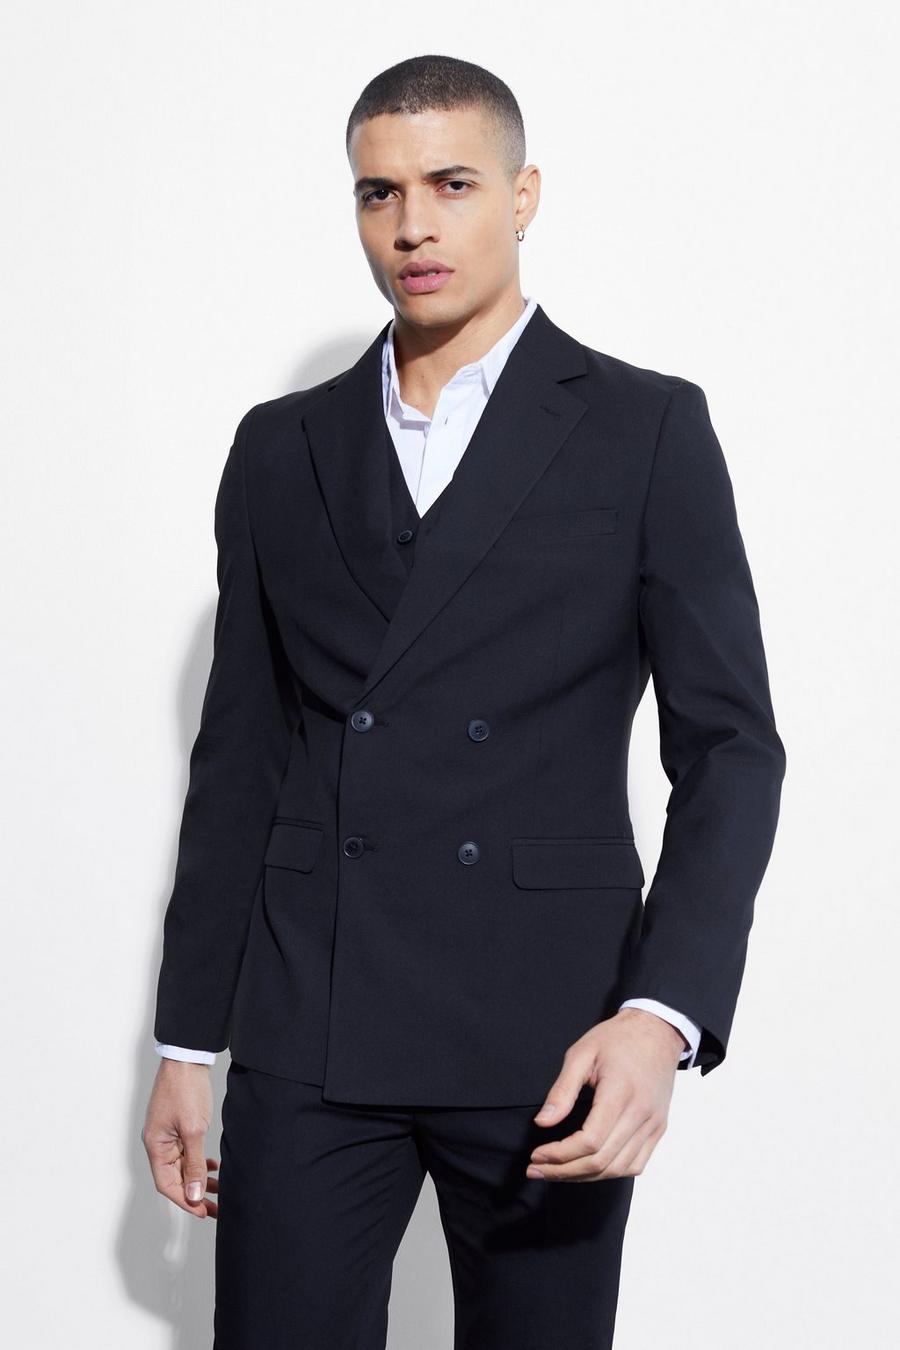 Black noir Skinny Double Breasted Suit Jacket